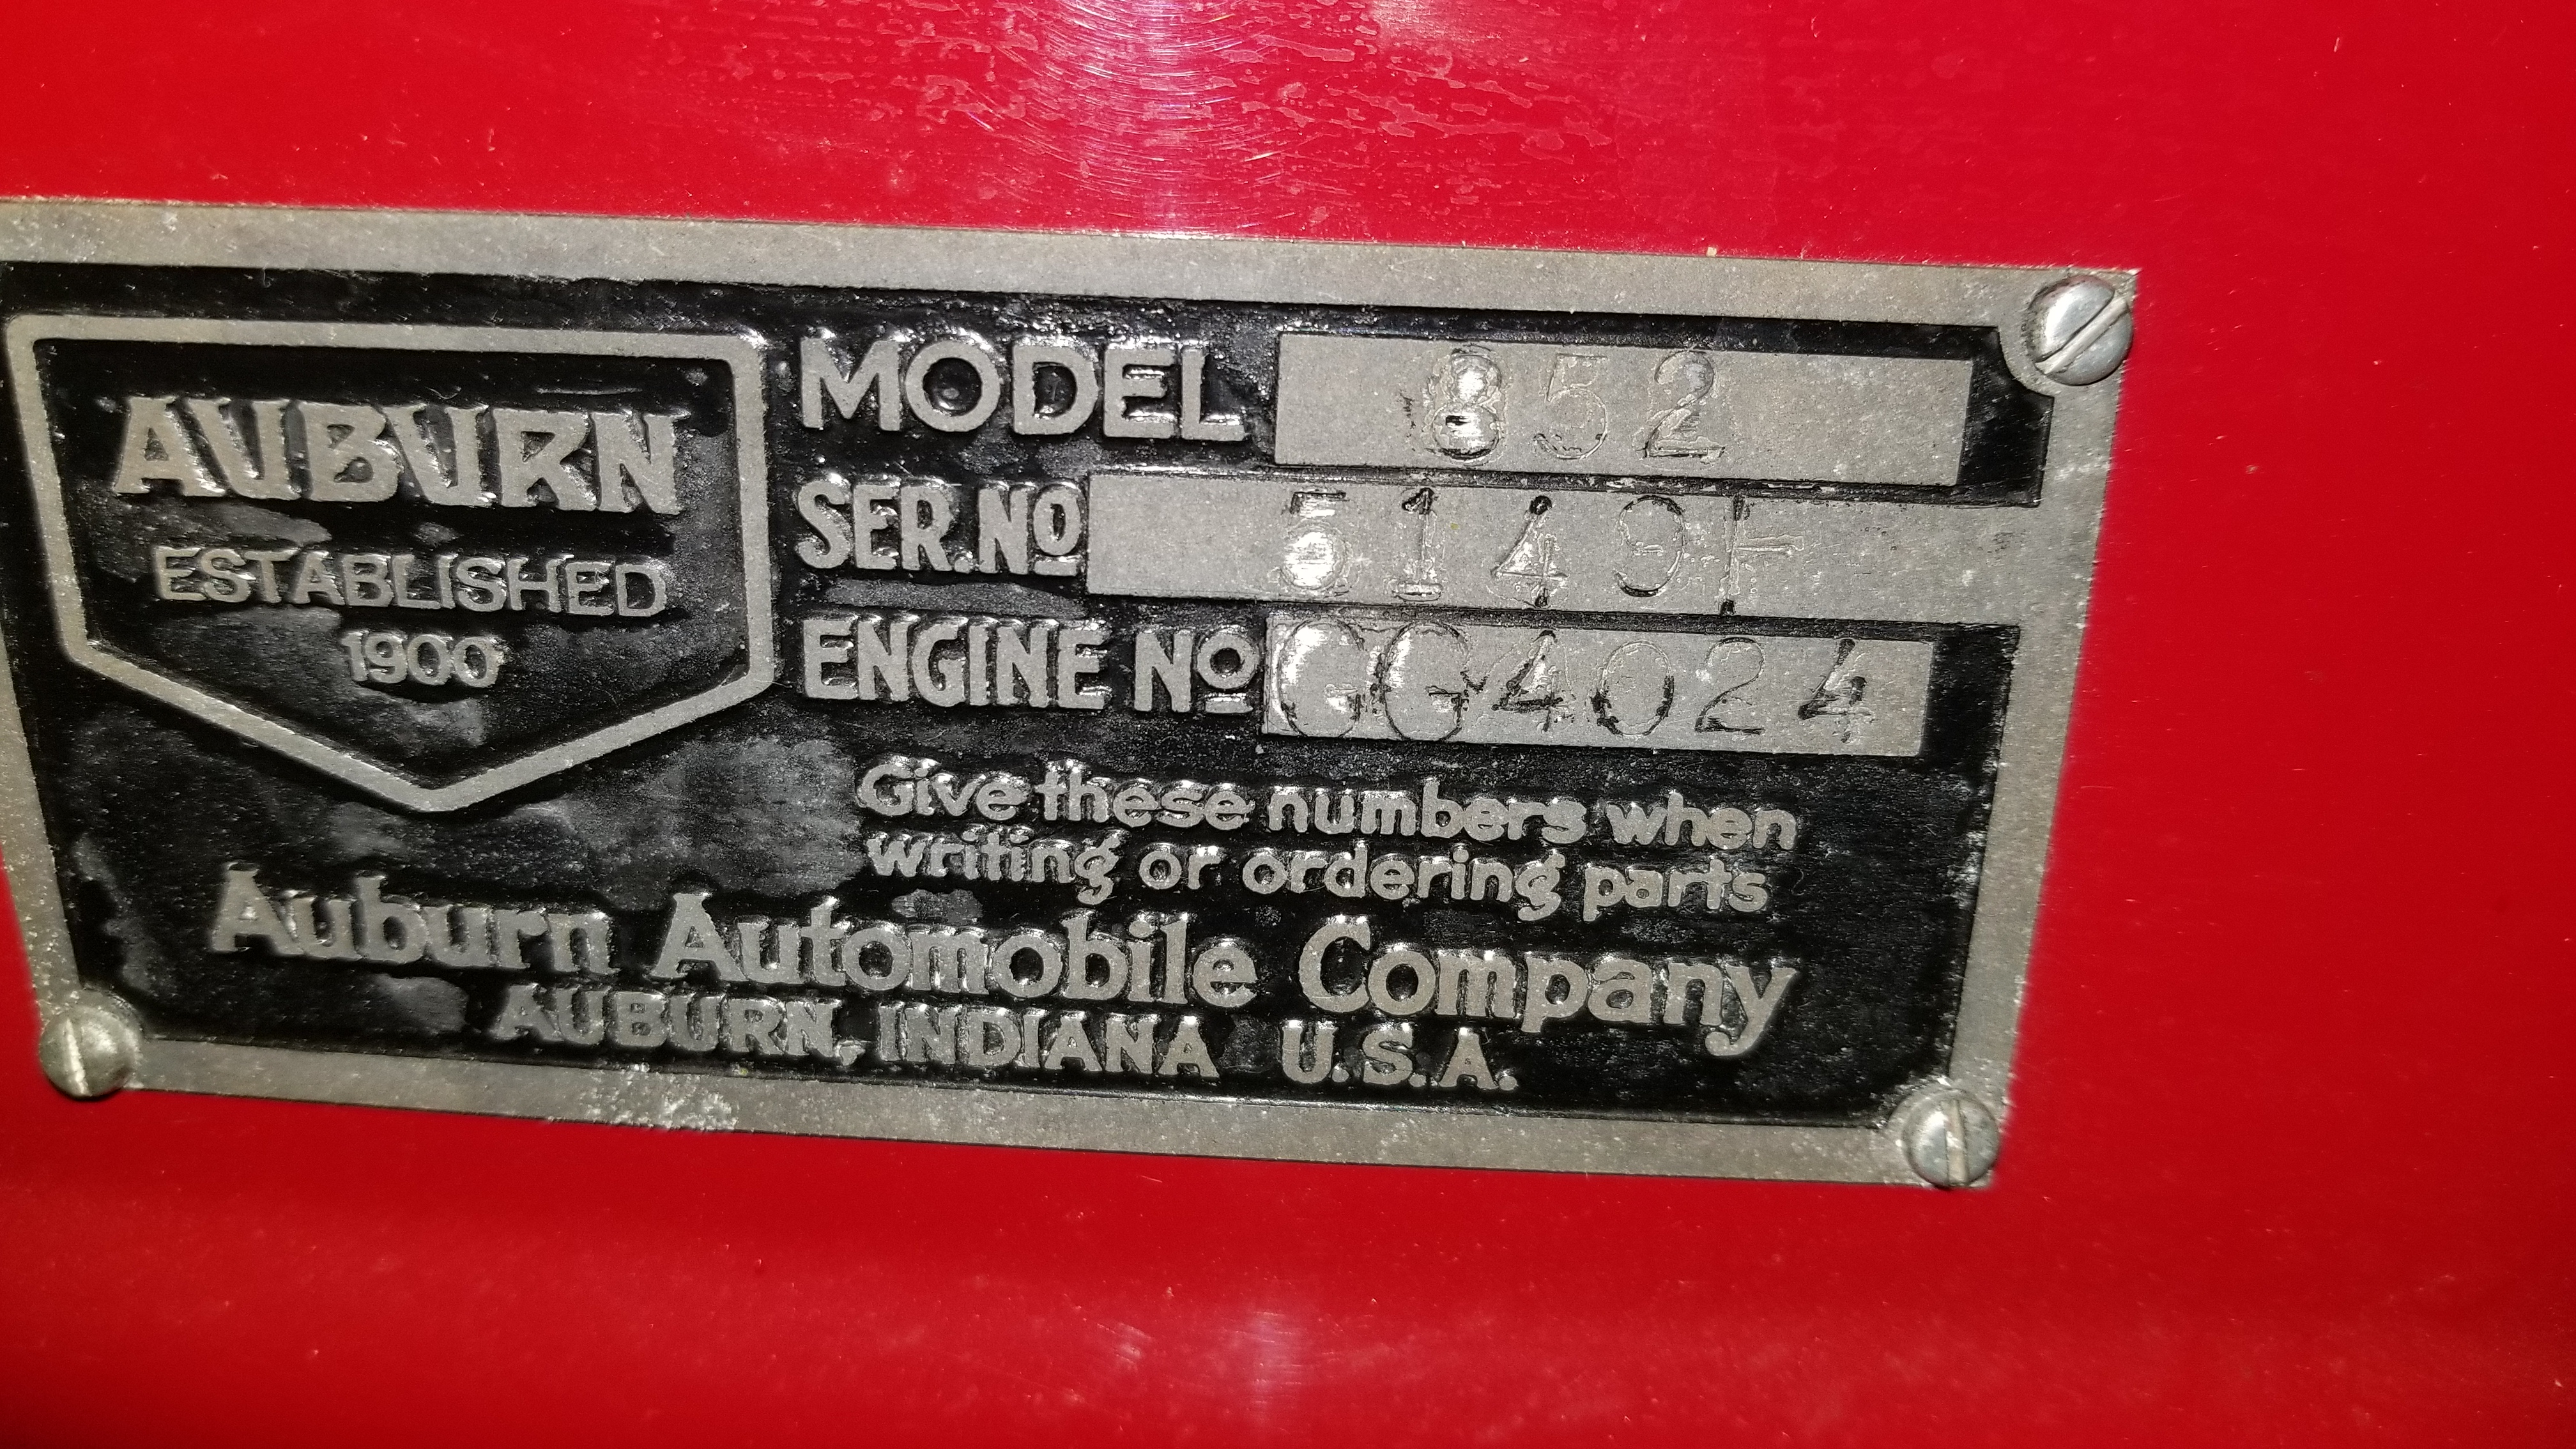 1935 auburn 851 custom